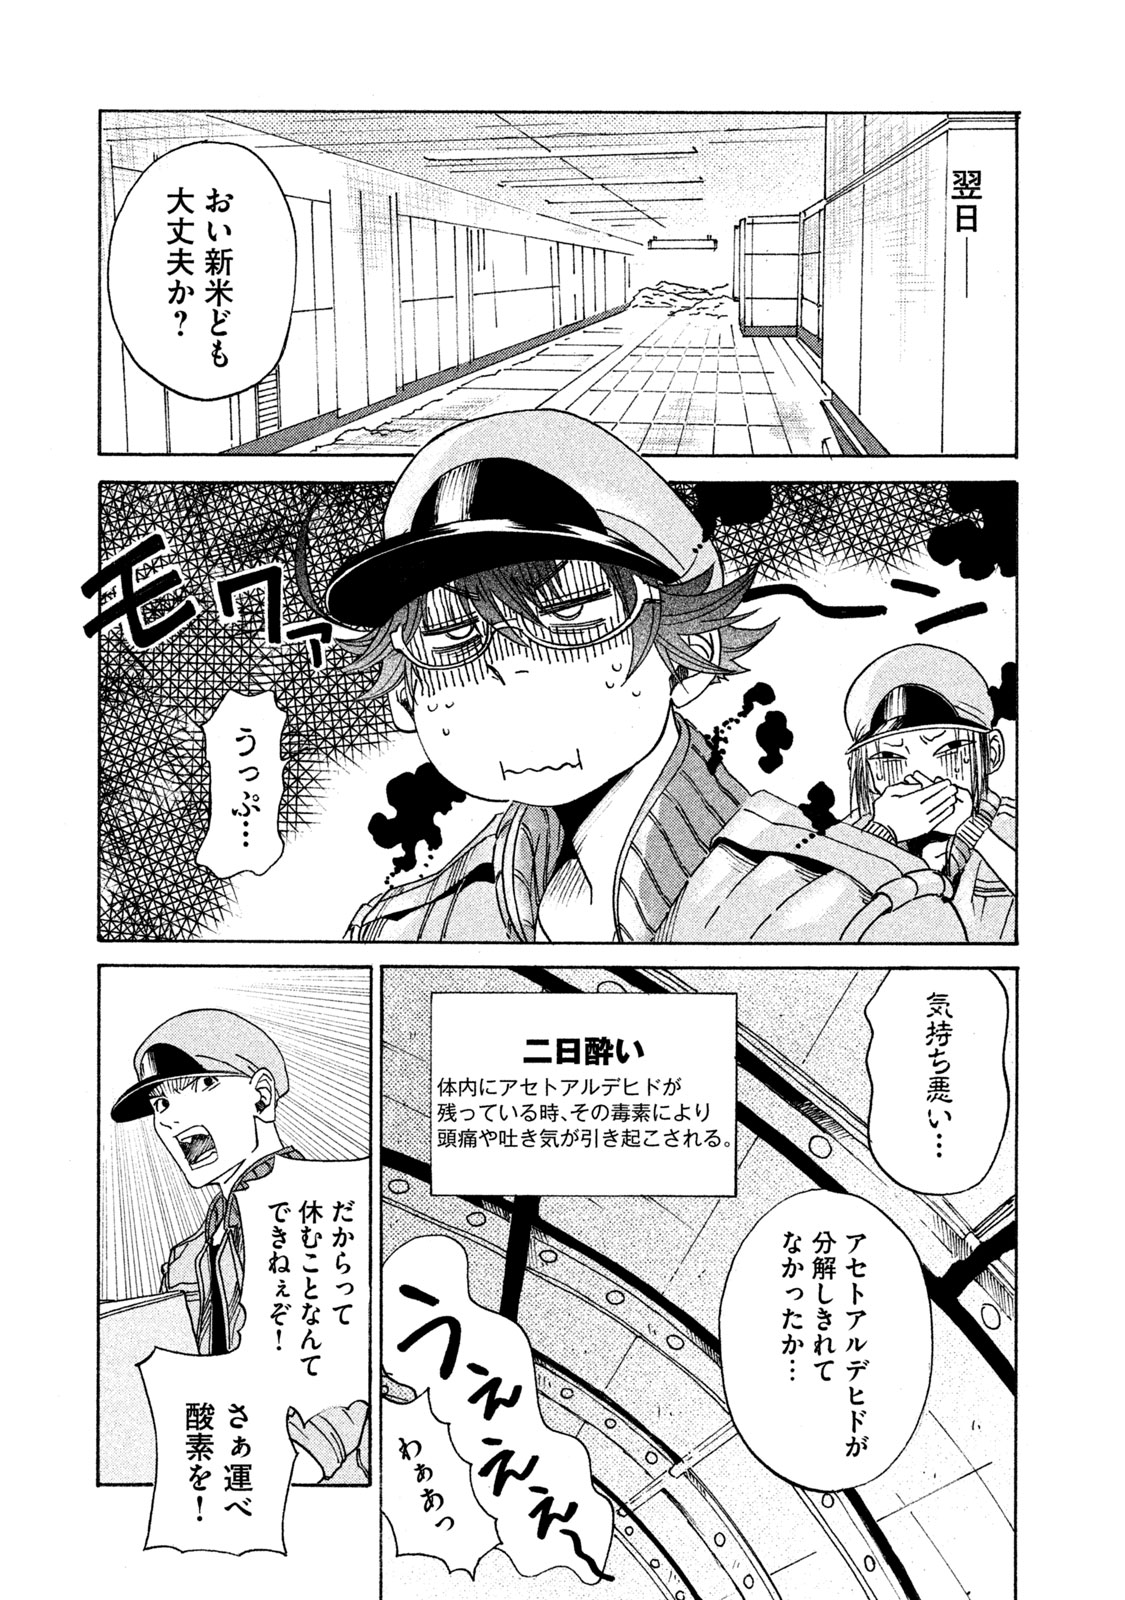 Hataraku Saibou BLACK - Chapter 2 - Page 29